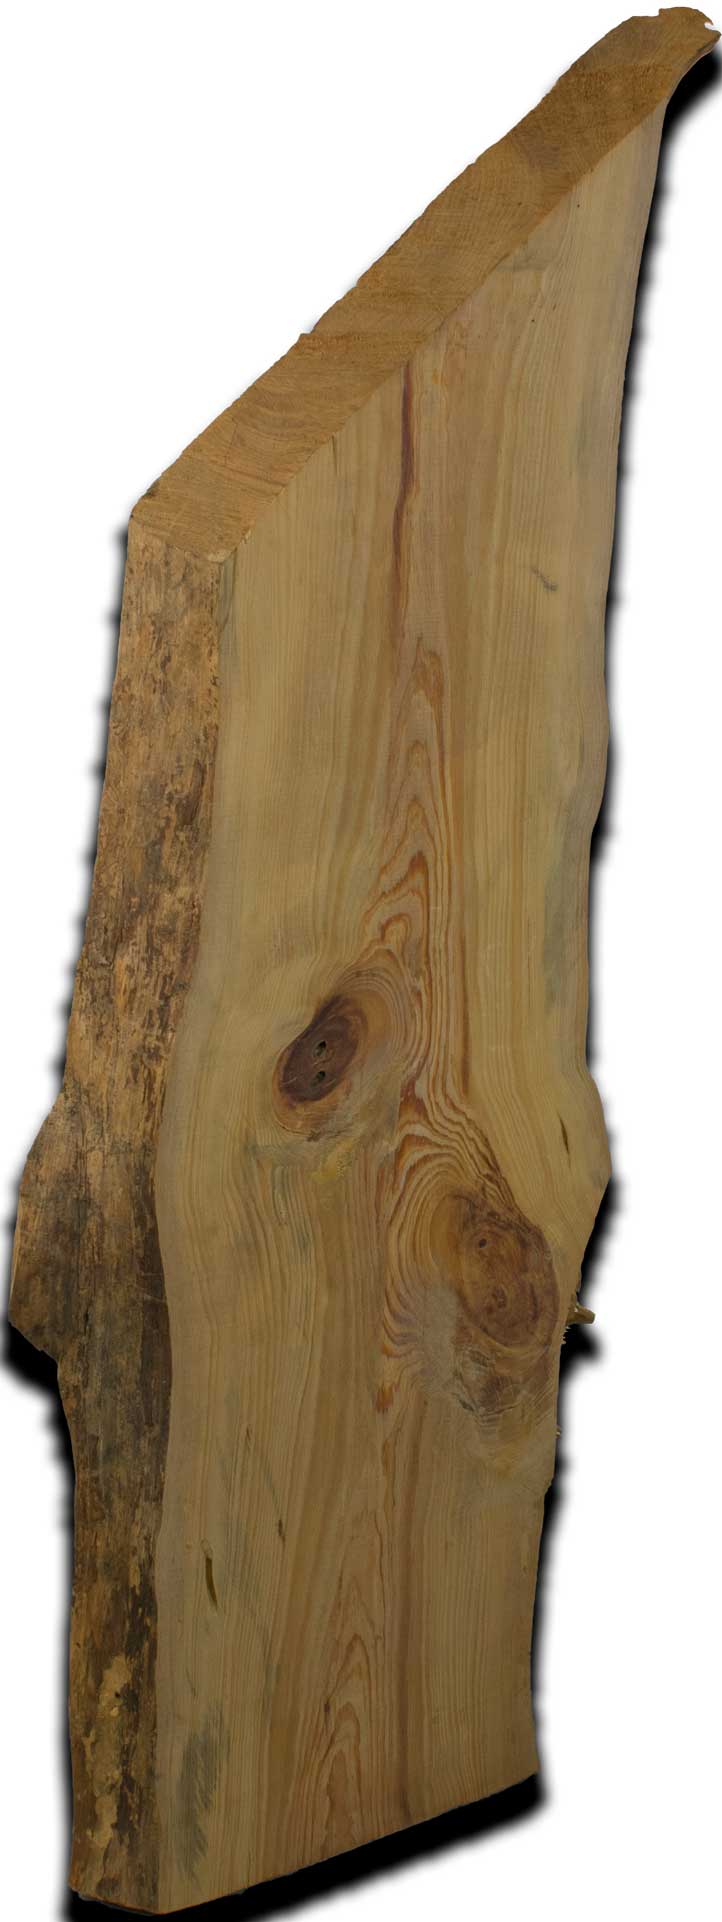 Dade County Pine Live Edge Wood Slab 3 In. x 14 In. x 36 In. - VSHE3DCP1